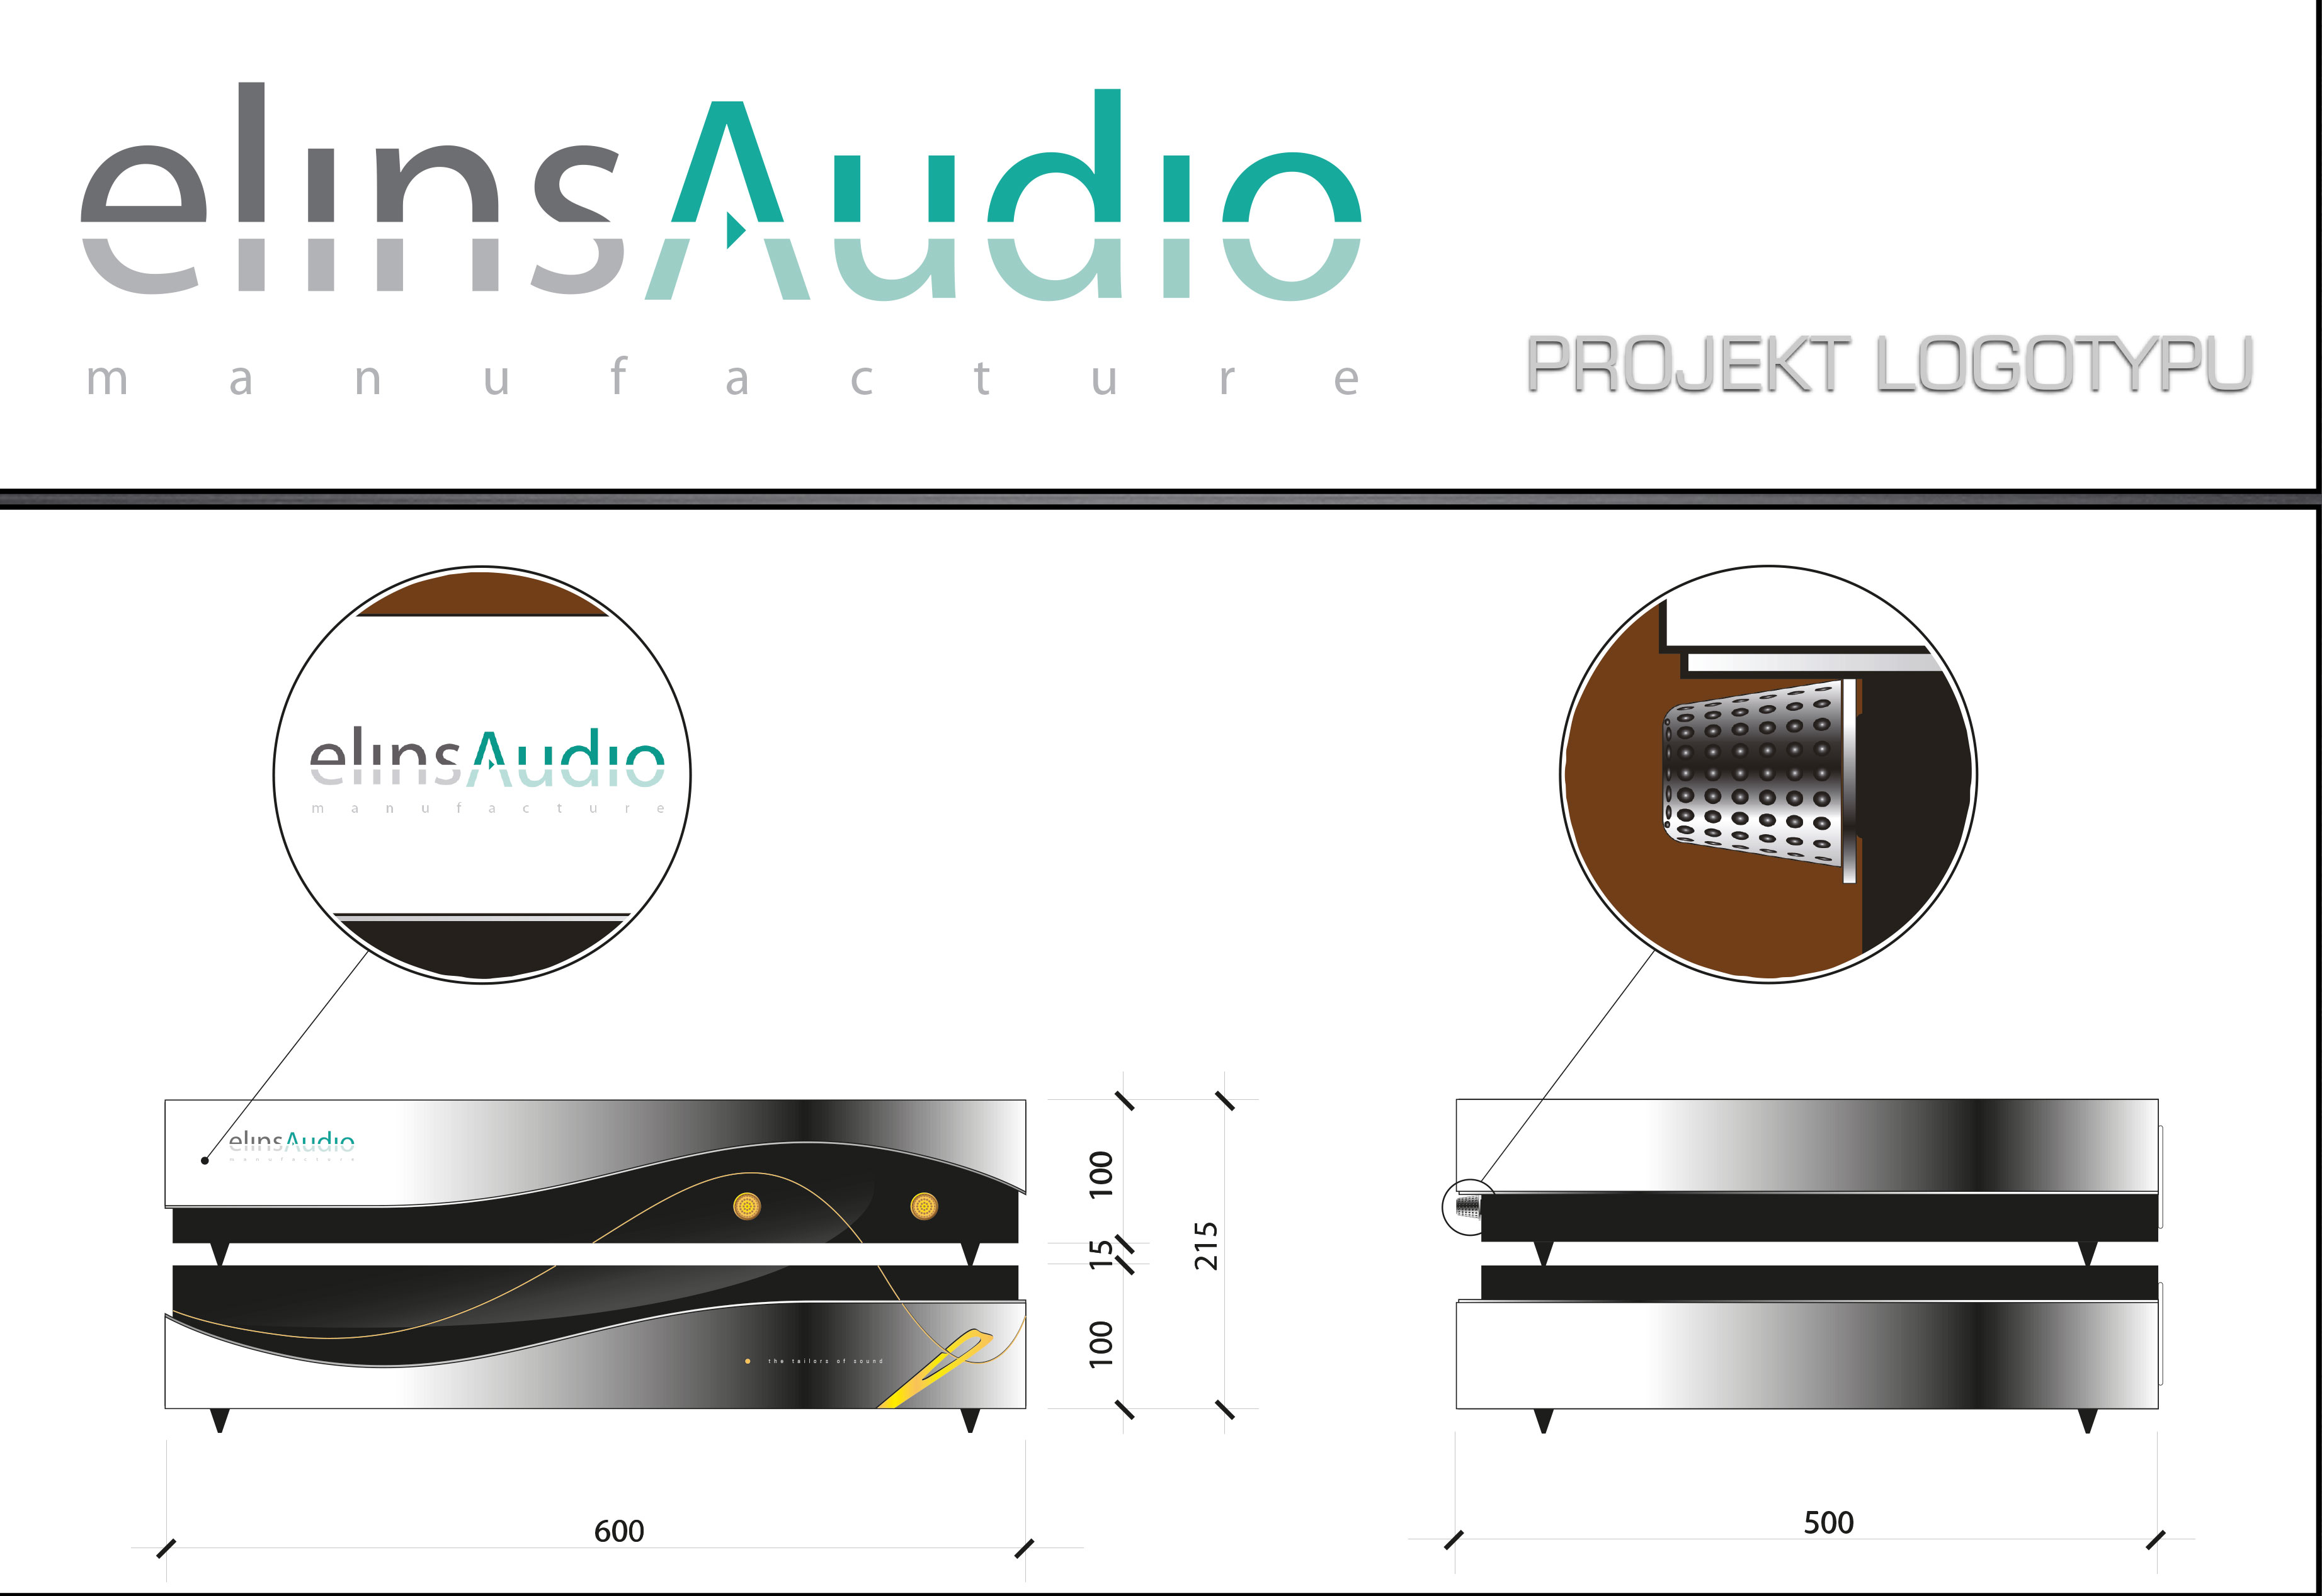 Projekt Logotypu ElinsAudio. Projekt zestawu audiofilskiego "The tailor of sound"